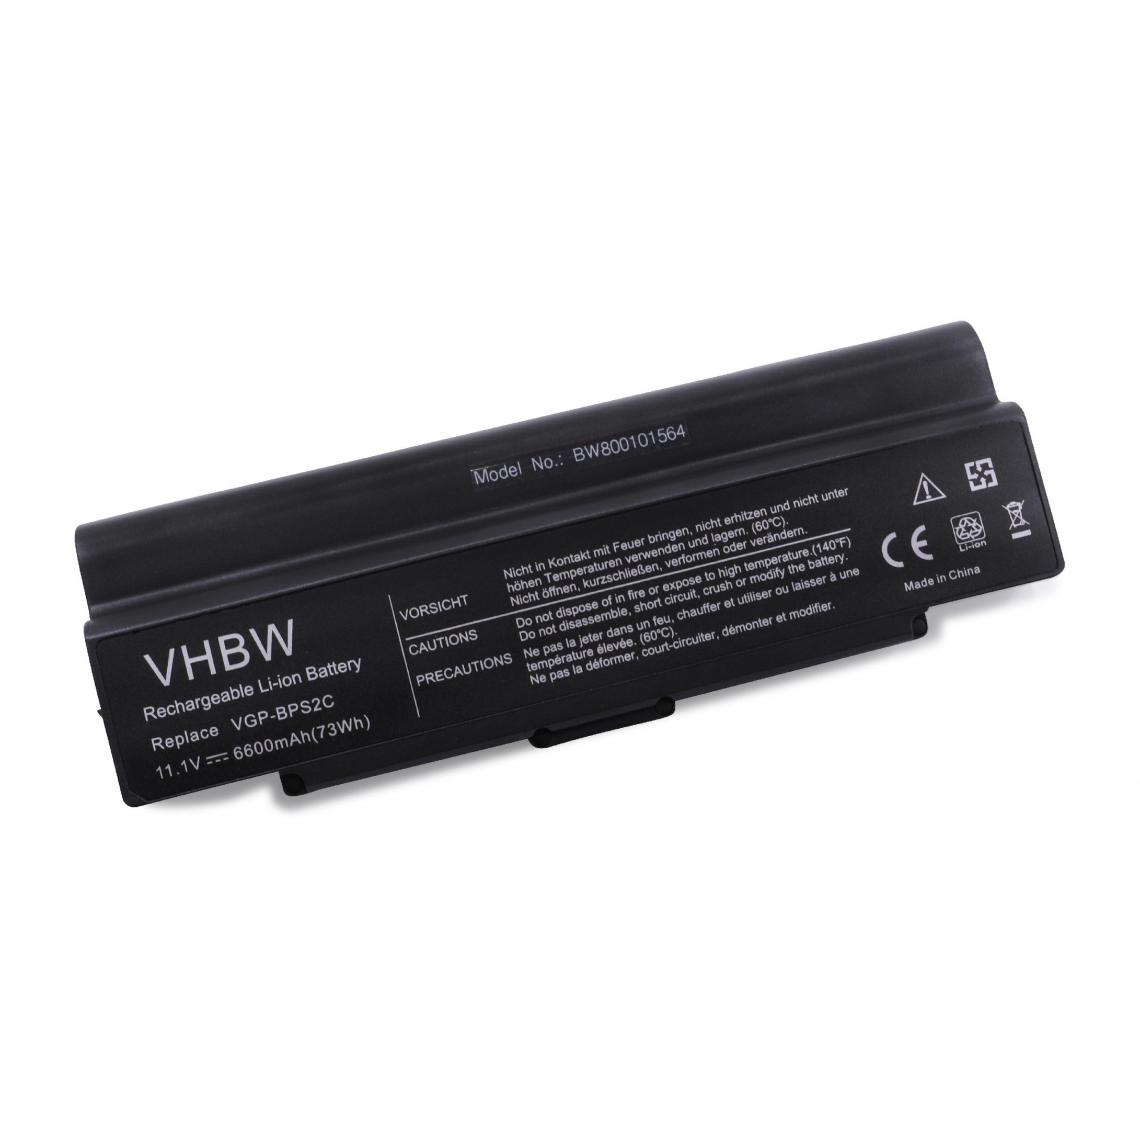 Vhbw - vhbw batterie Li-Ion 6600mAh (11.1V) pour Notebook ordinateur Sony VAIO VGN-S49CP/B, VGN-S4HP, VGN-S4M/S, VGN-S4VP/B,VGN-S4XP, VGN-S50B comme VGP-BPS2 - Batterie PC Portable